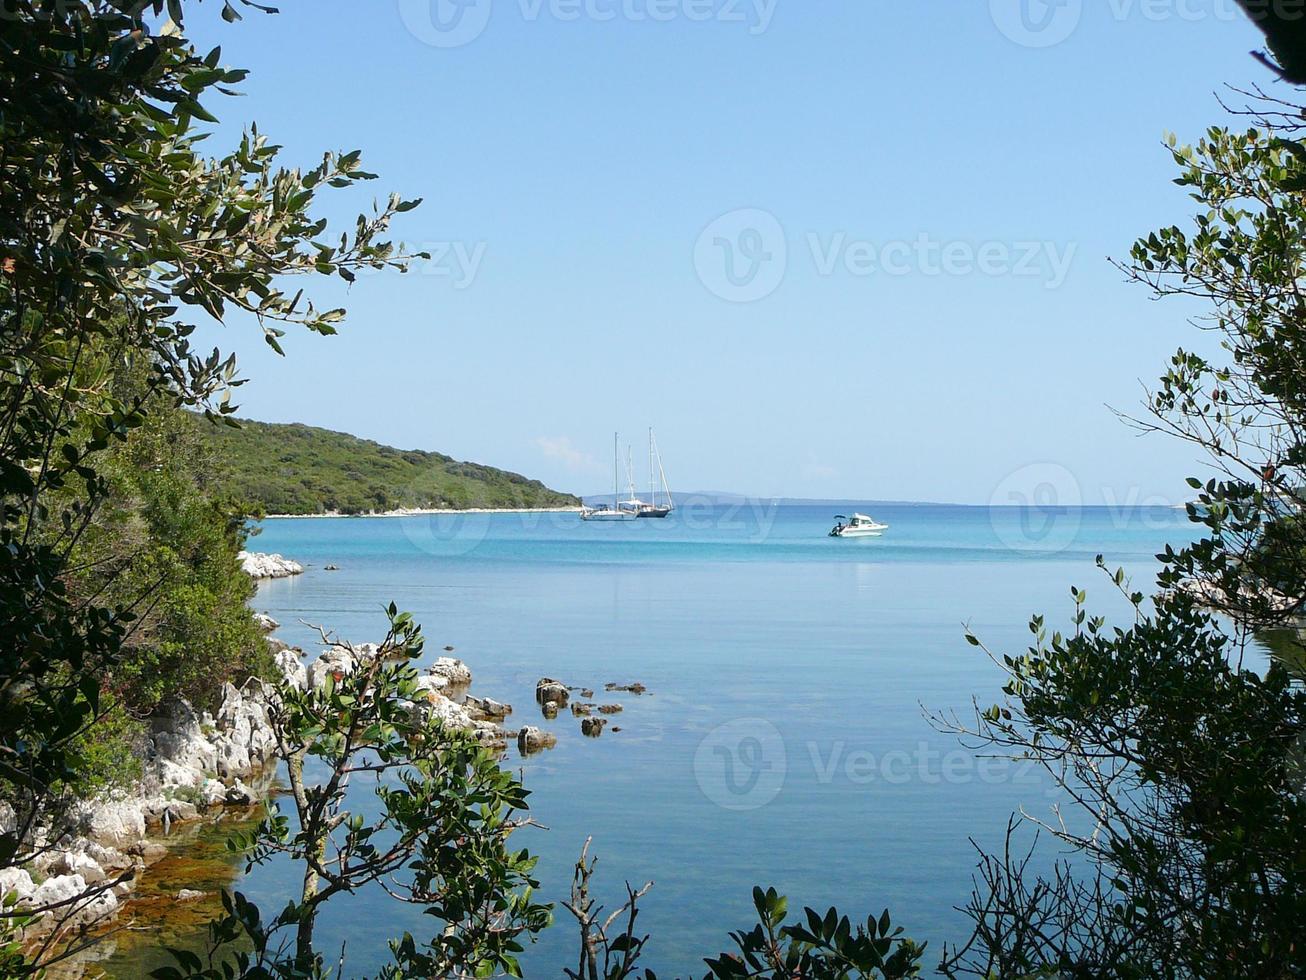 unije-eiland in kroatië deel van de cres losinj-archipel in t foto